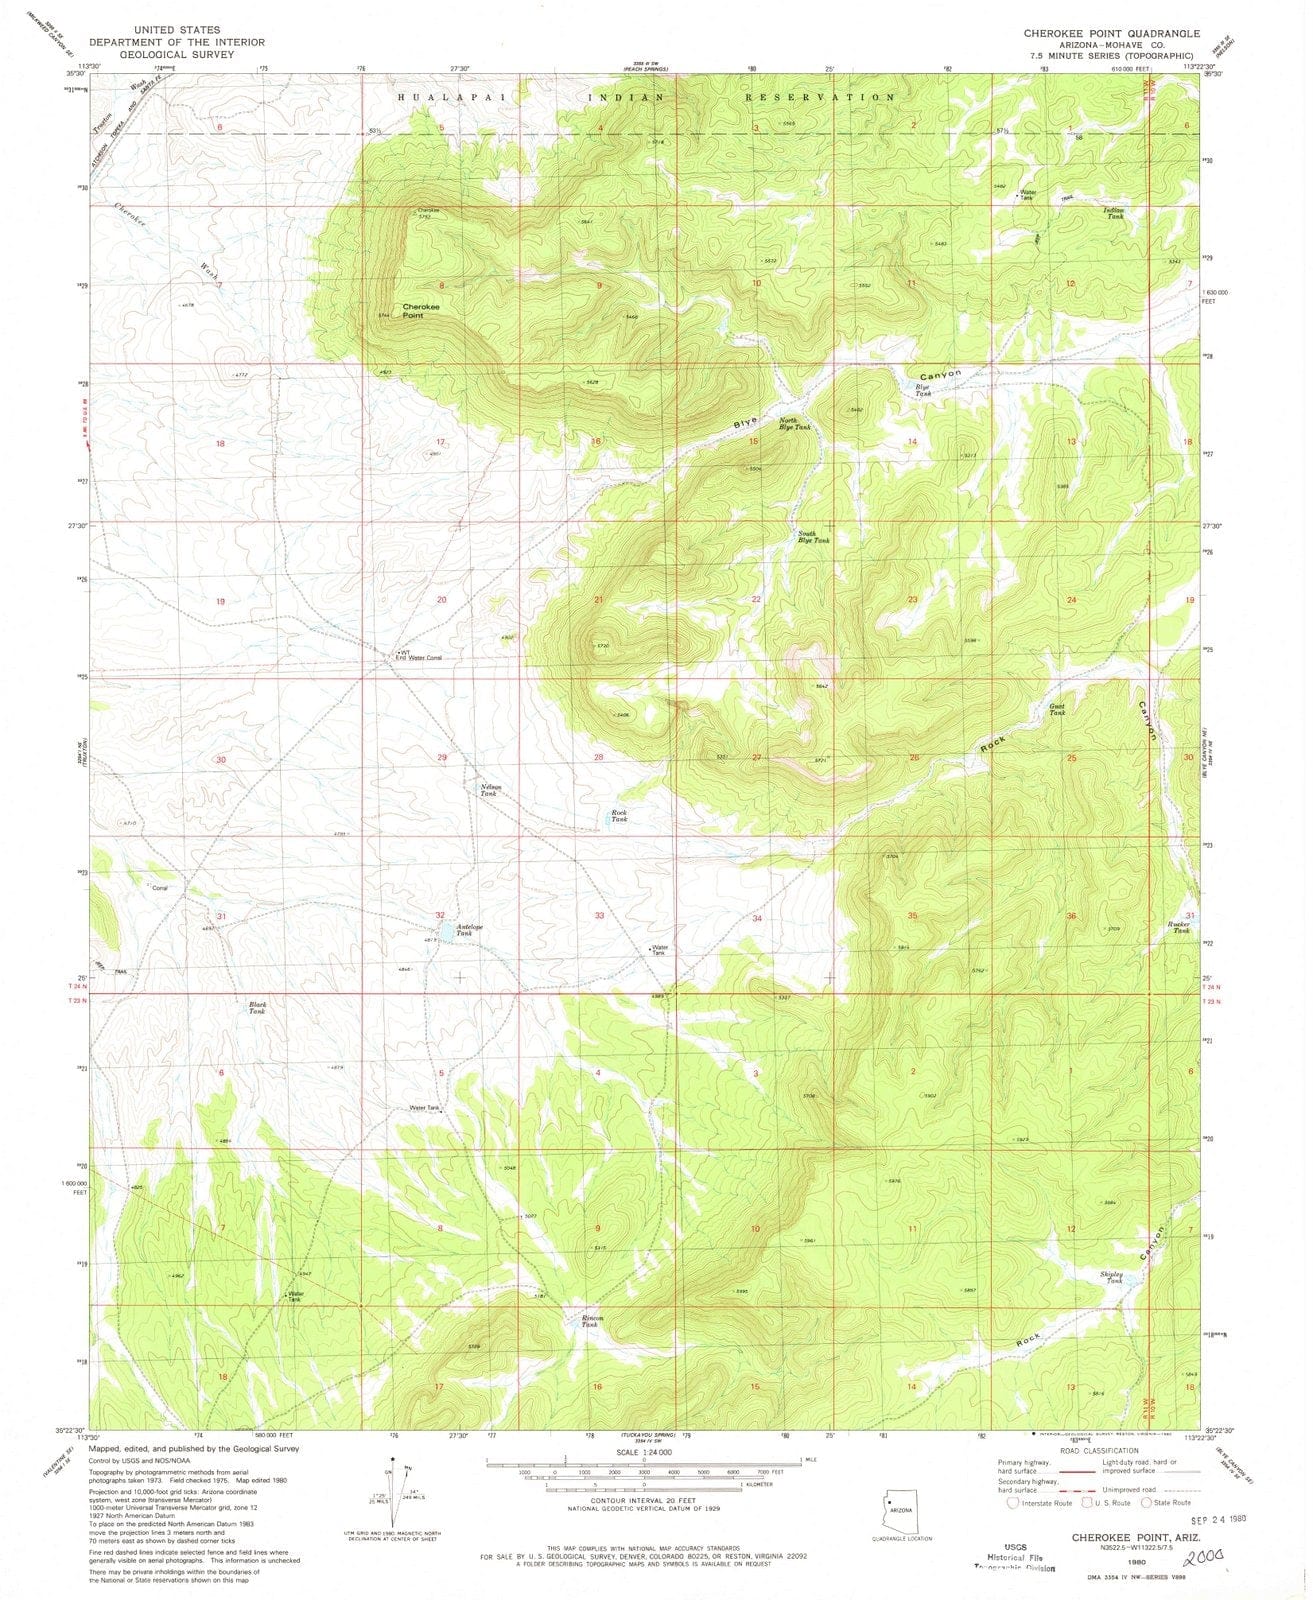 1980 Cherokee Point, AZ - Arizona - USGS Topographic Map